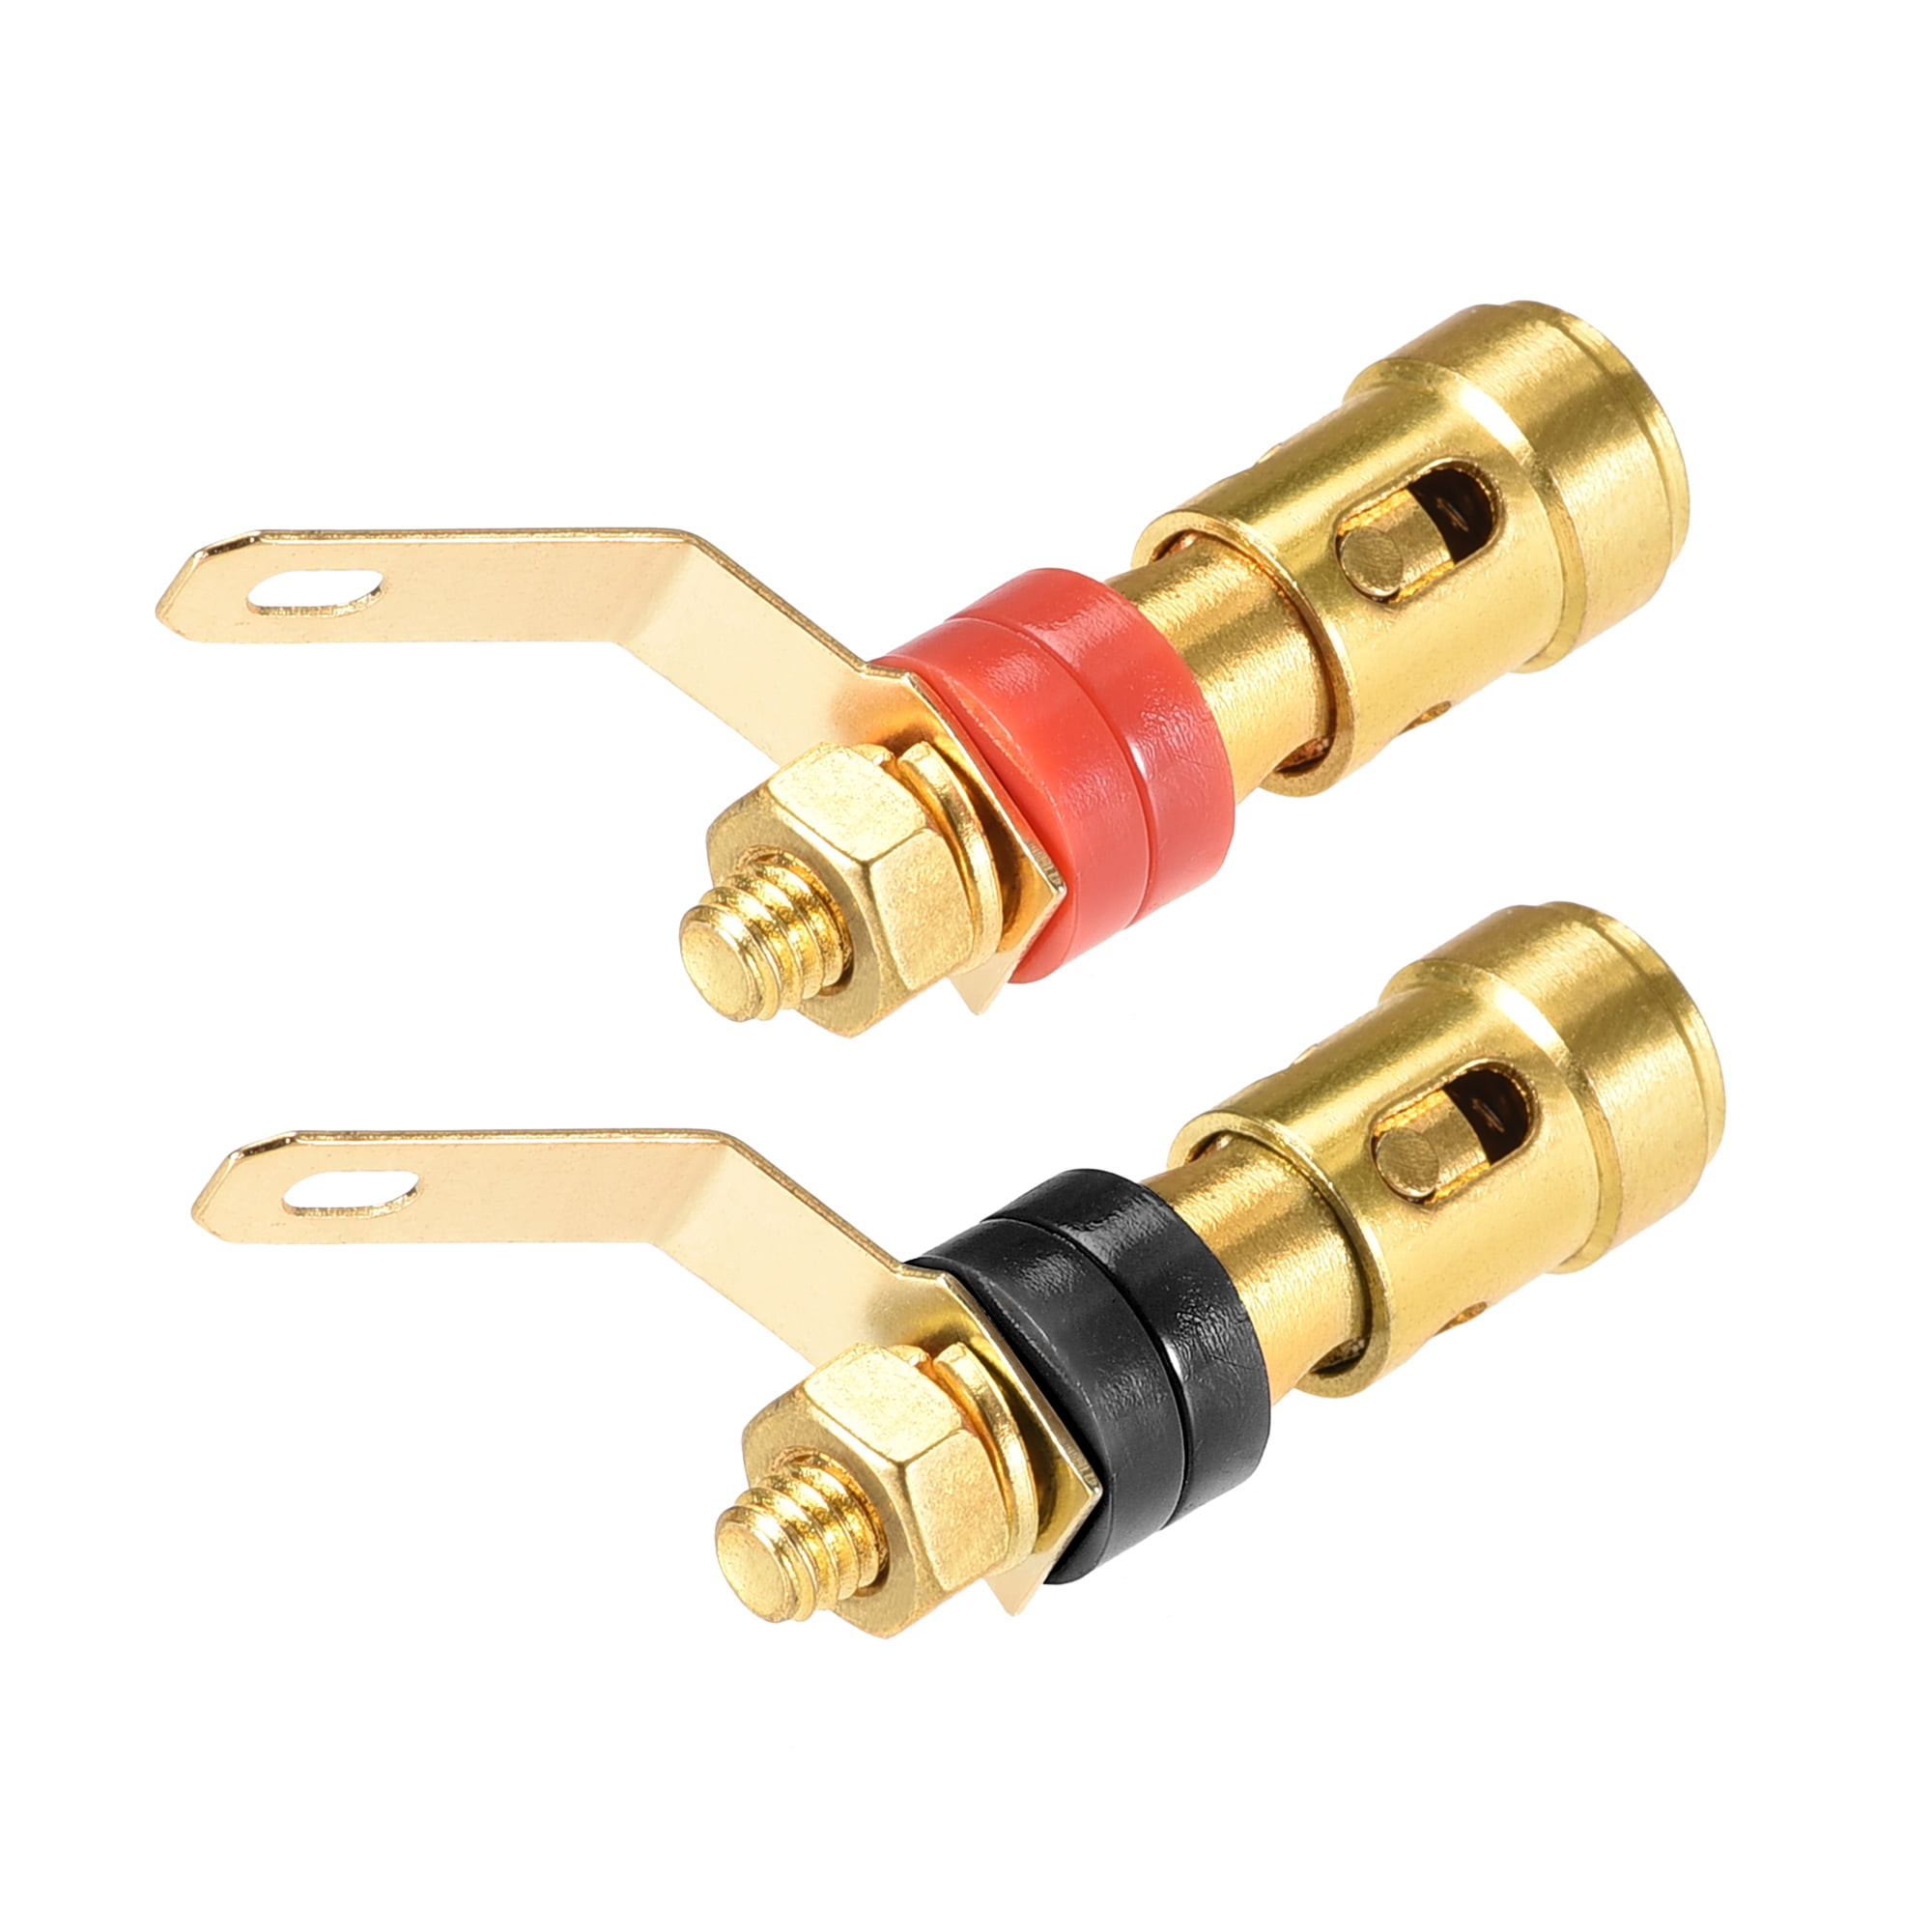 2 Pcs Gold Plated Copper RCA Panel Mount Female Jack Terminal Socket Audio Connector Subwoofer KitsSpeaker Parts & Components 